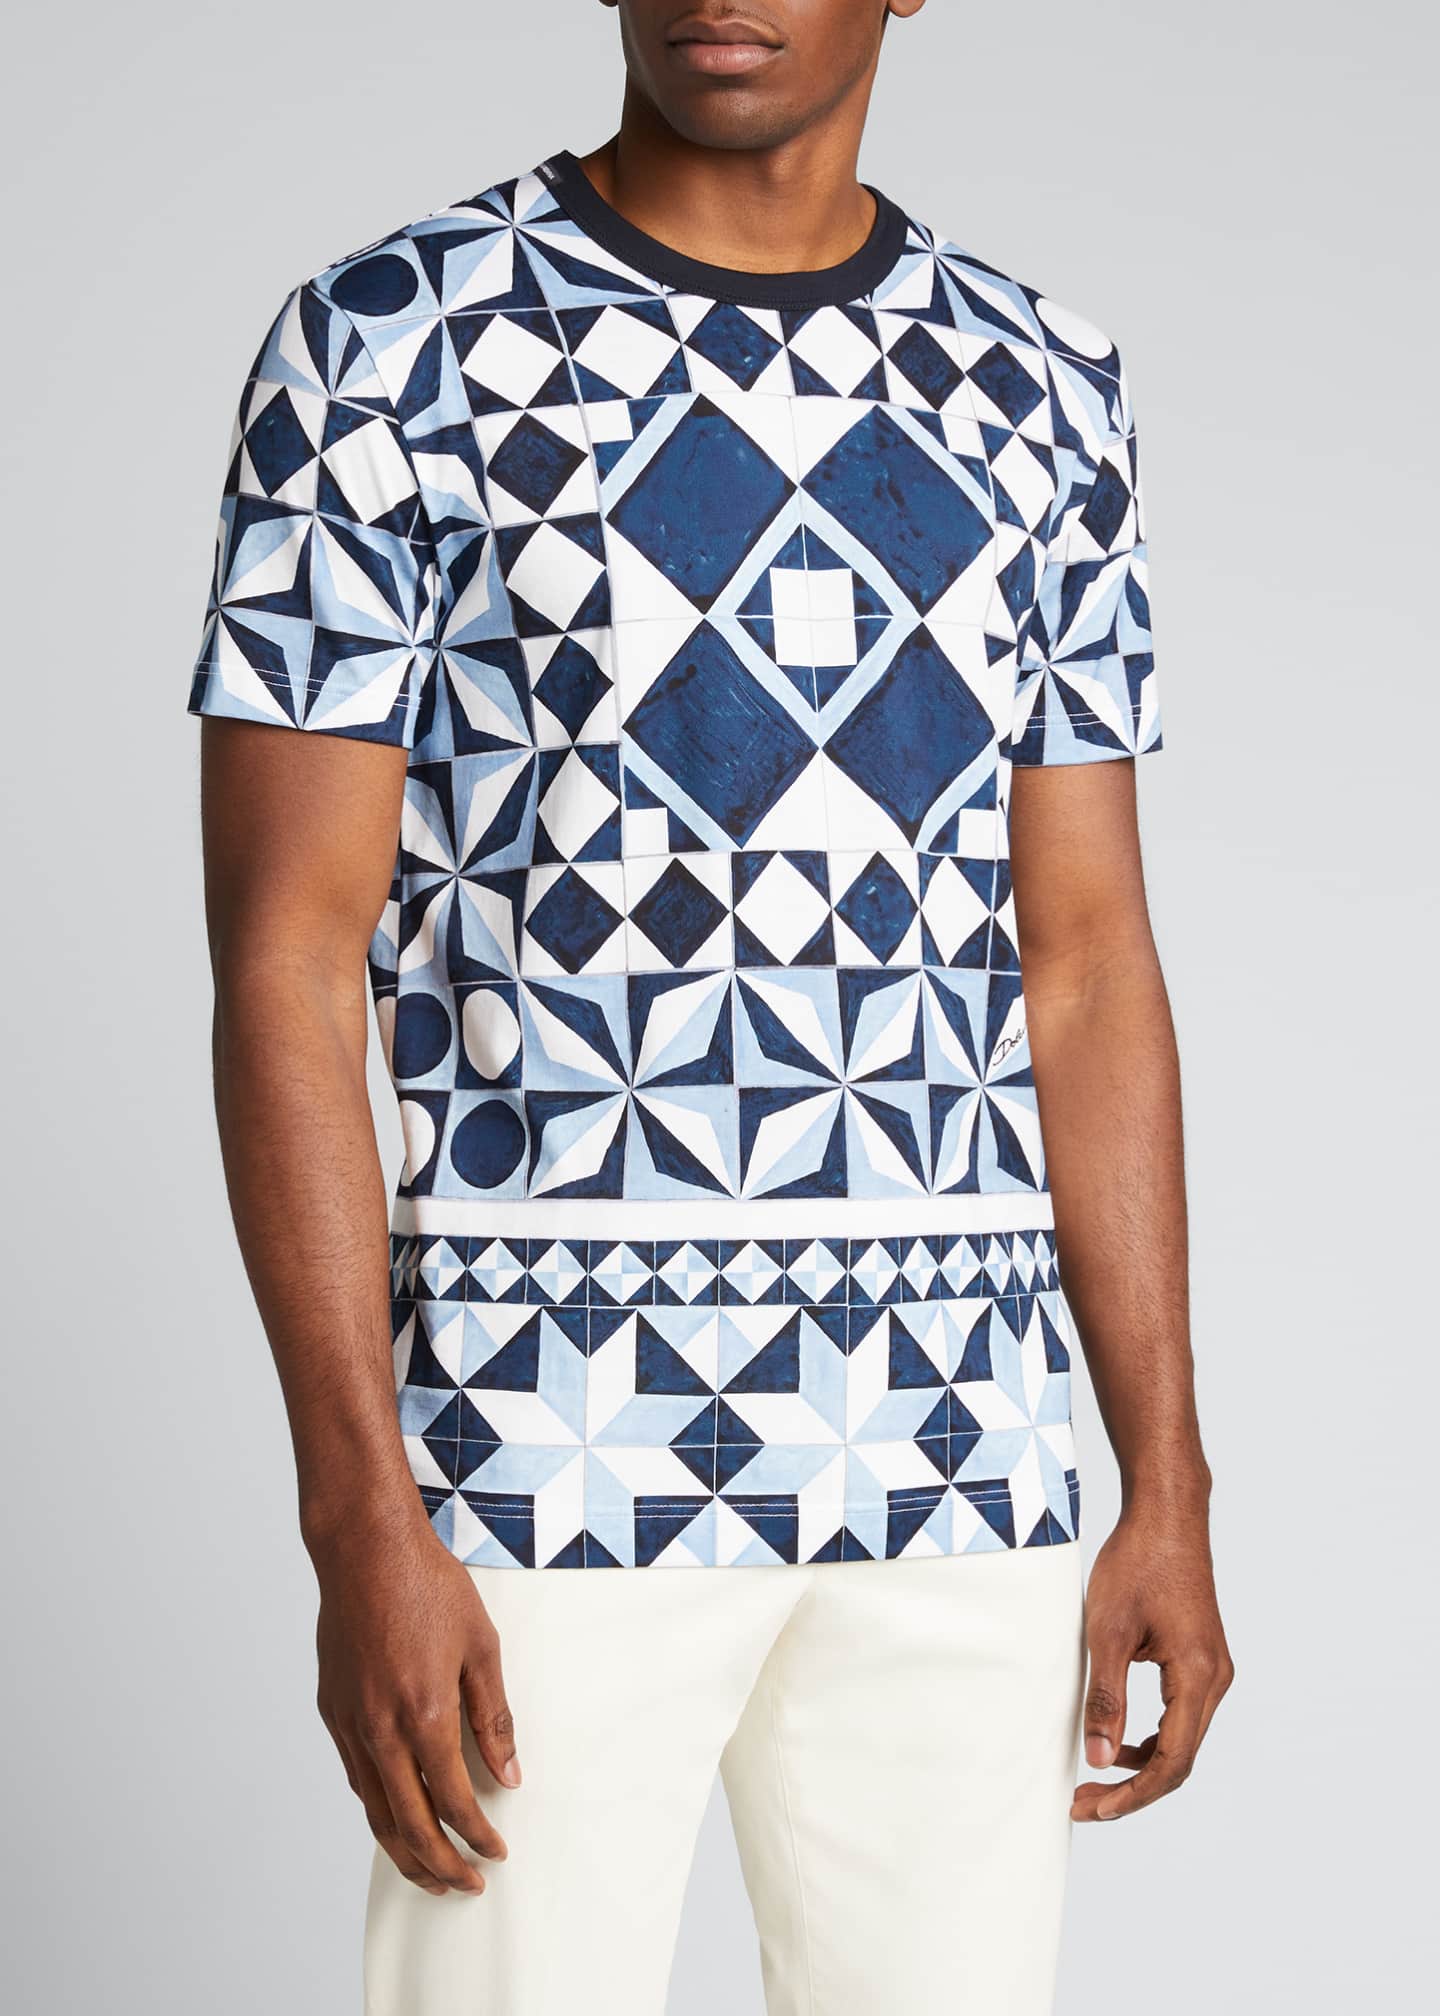 Dolce&Gabbana Men's Tile-Print T-Shirt - Bergdorf Goodman